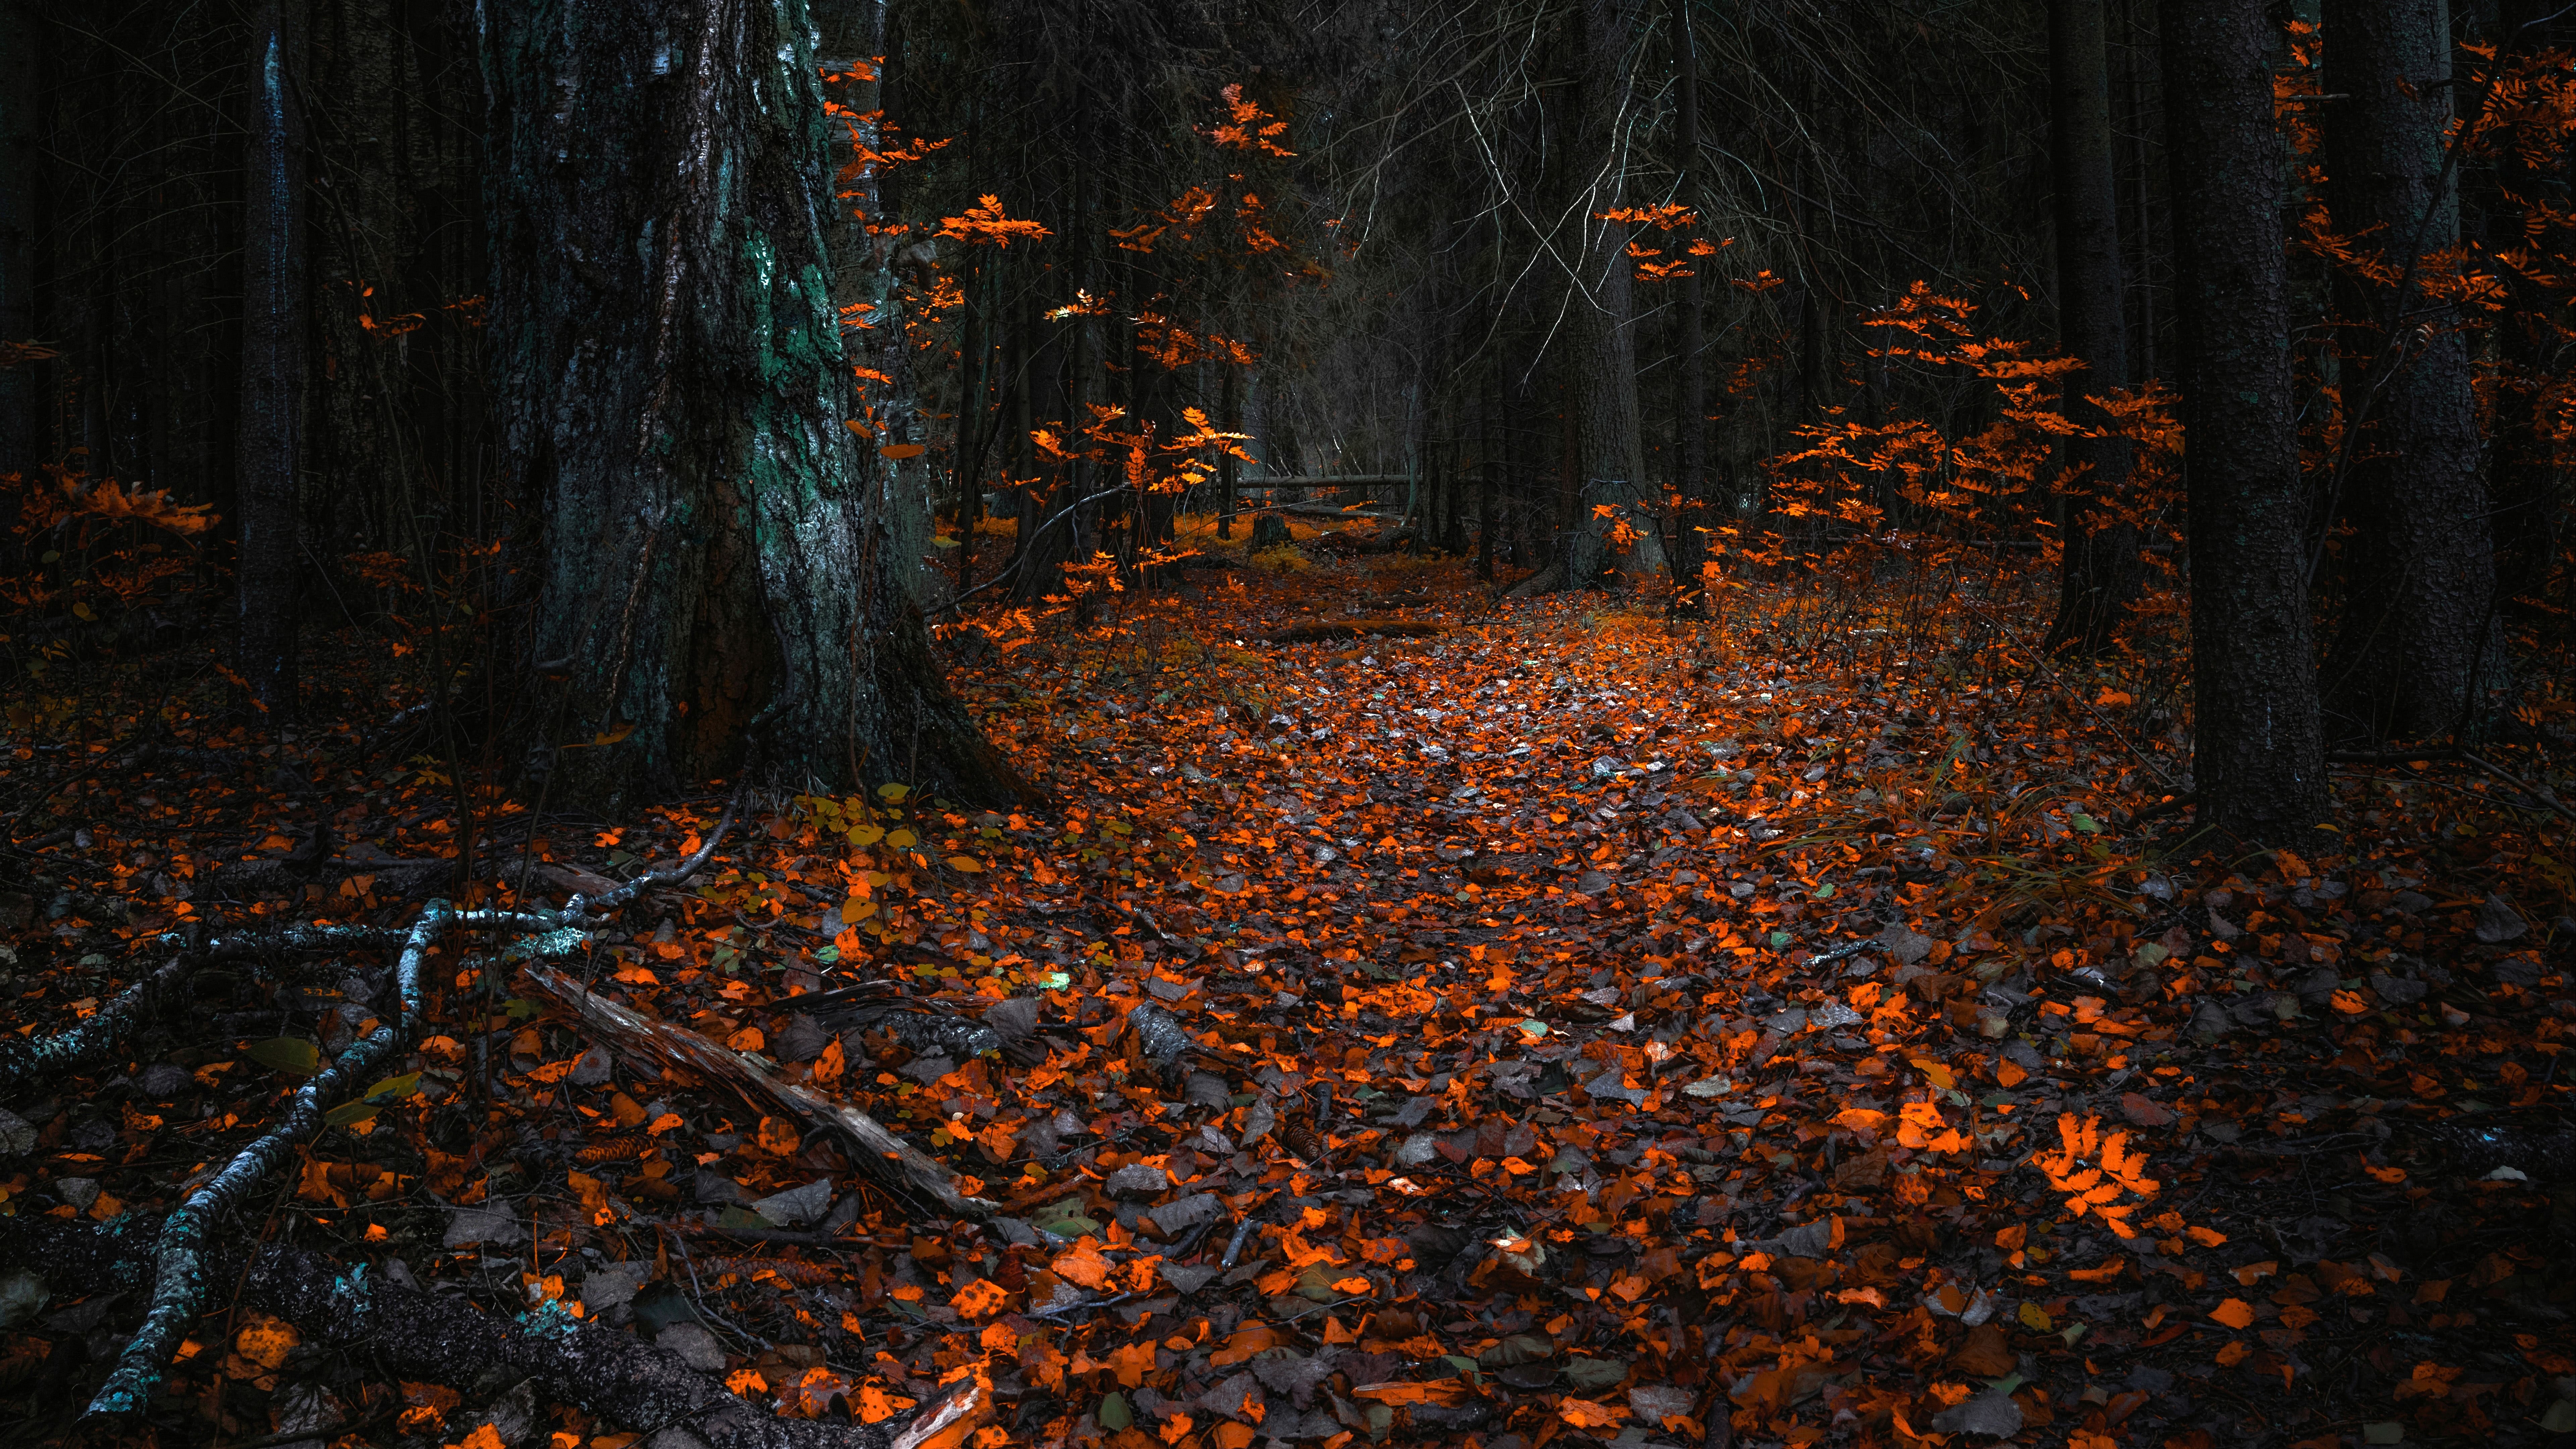 Download wallpaper 7680x4320 autumn, orange leaves, forest, nature 8k  wallpaper, 7680x4320 8k background, 16957